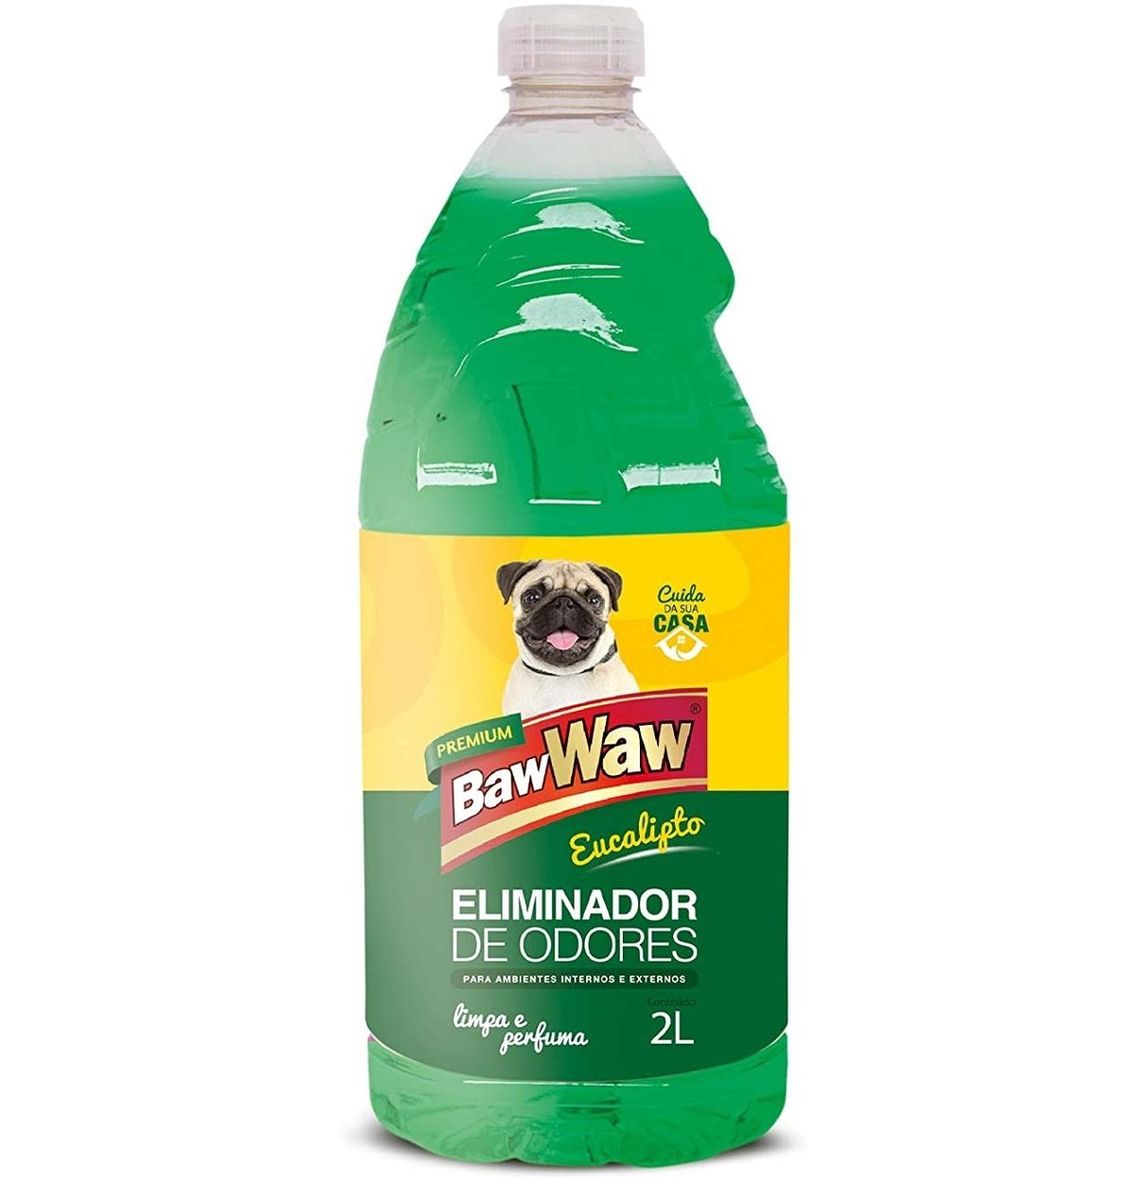 Eliminador de Odores Baw Waw Eucalipto 2L image number 0